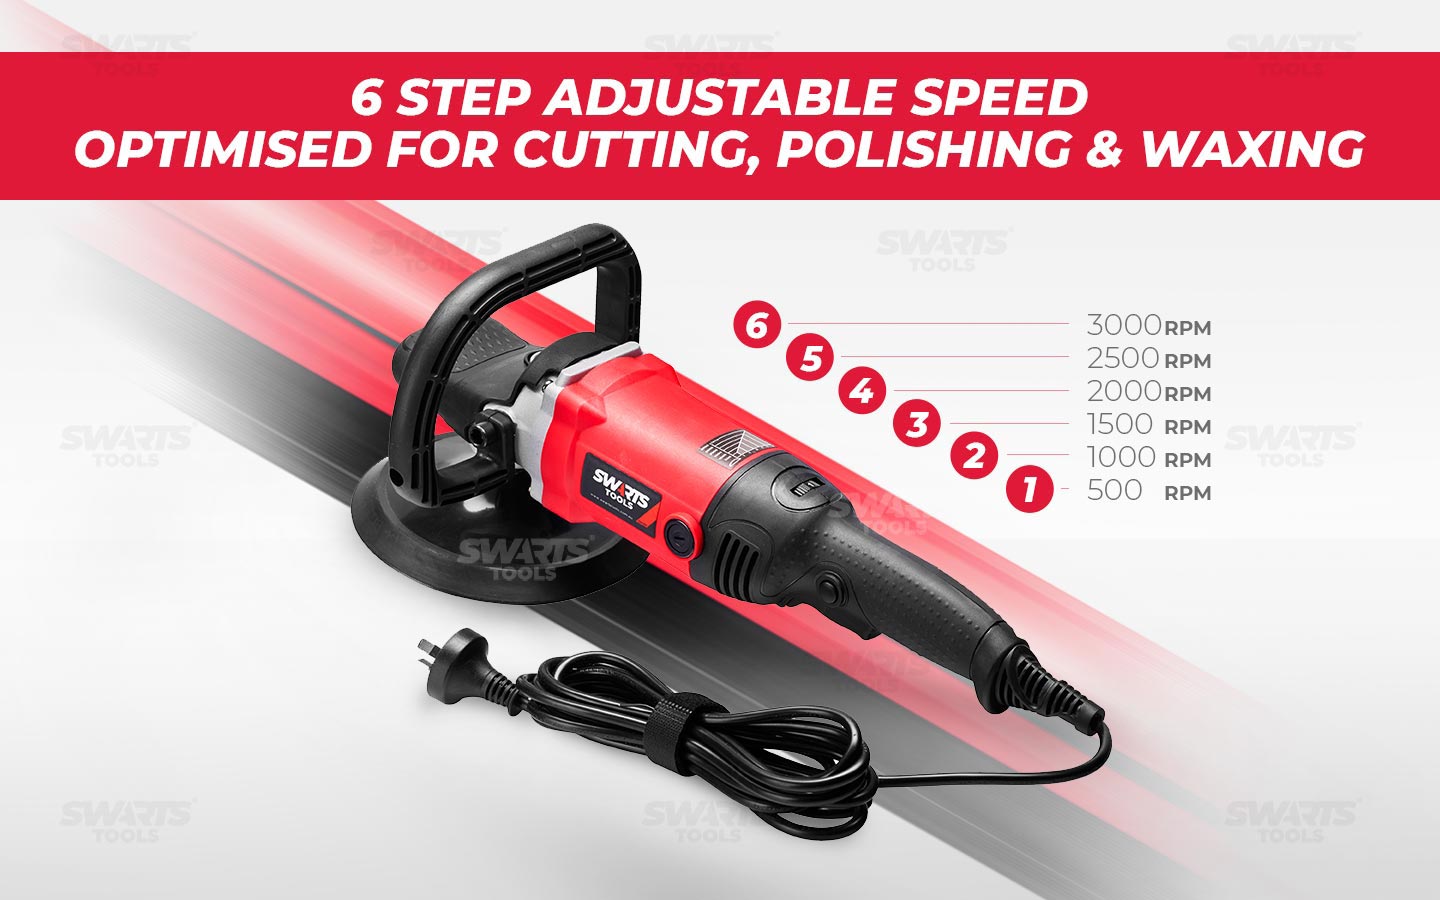 6 step adjustable speed optimised for cutting, polishing & waxing